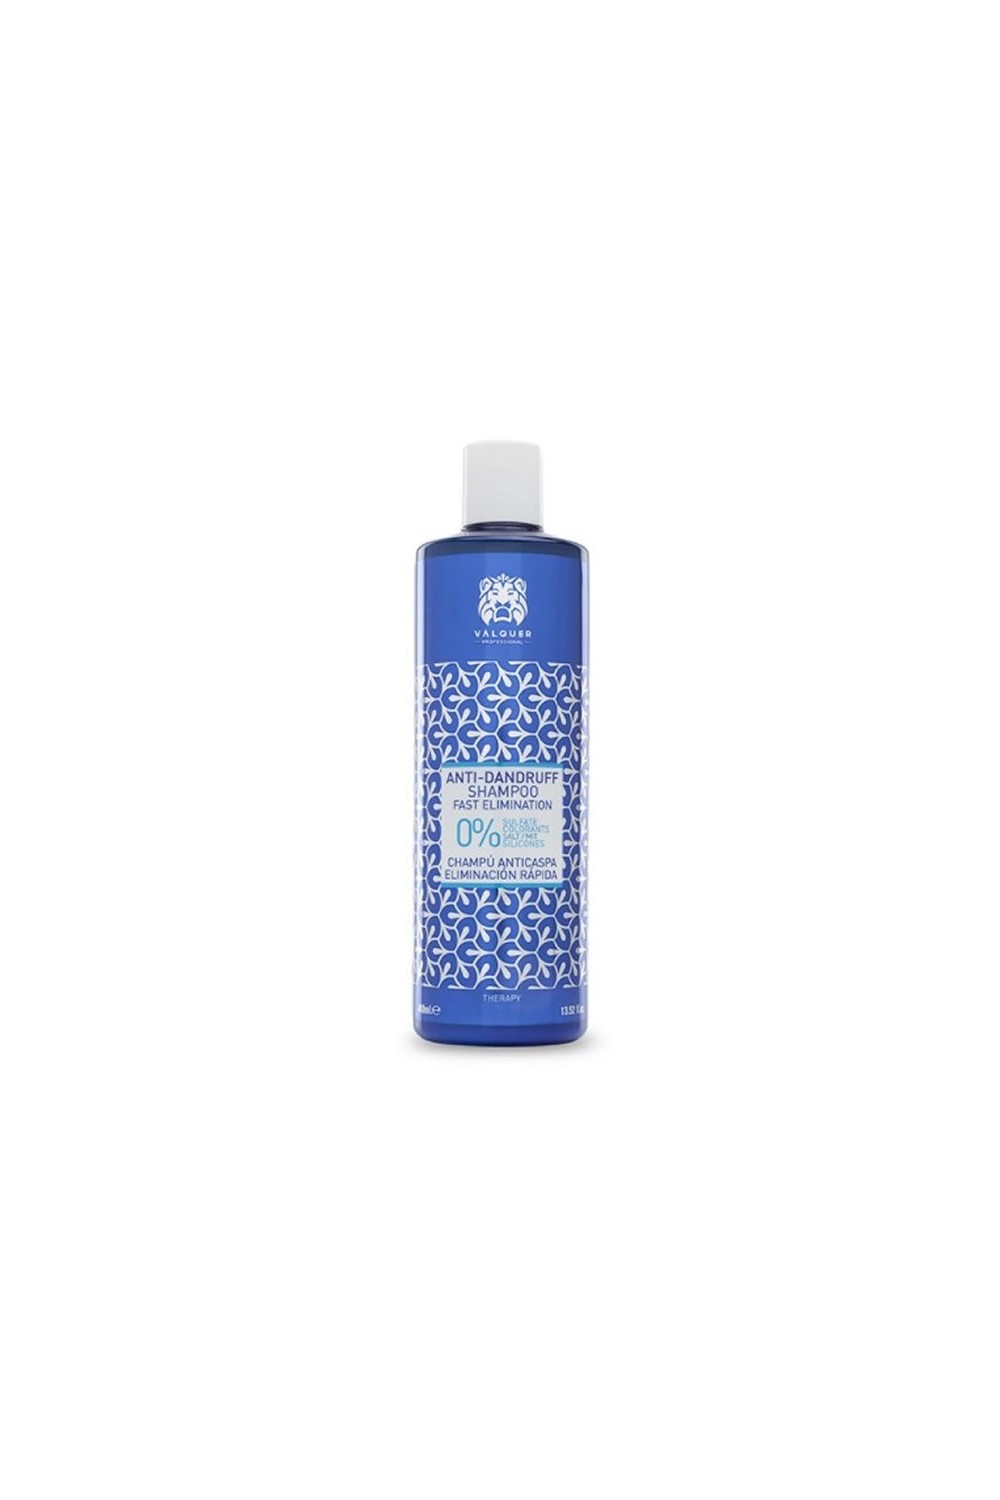 Valquer Anti-Dandruff Shampoo 0% Fast Elimination 400ml